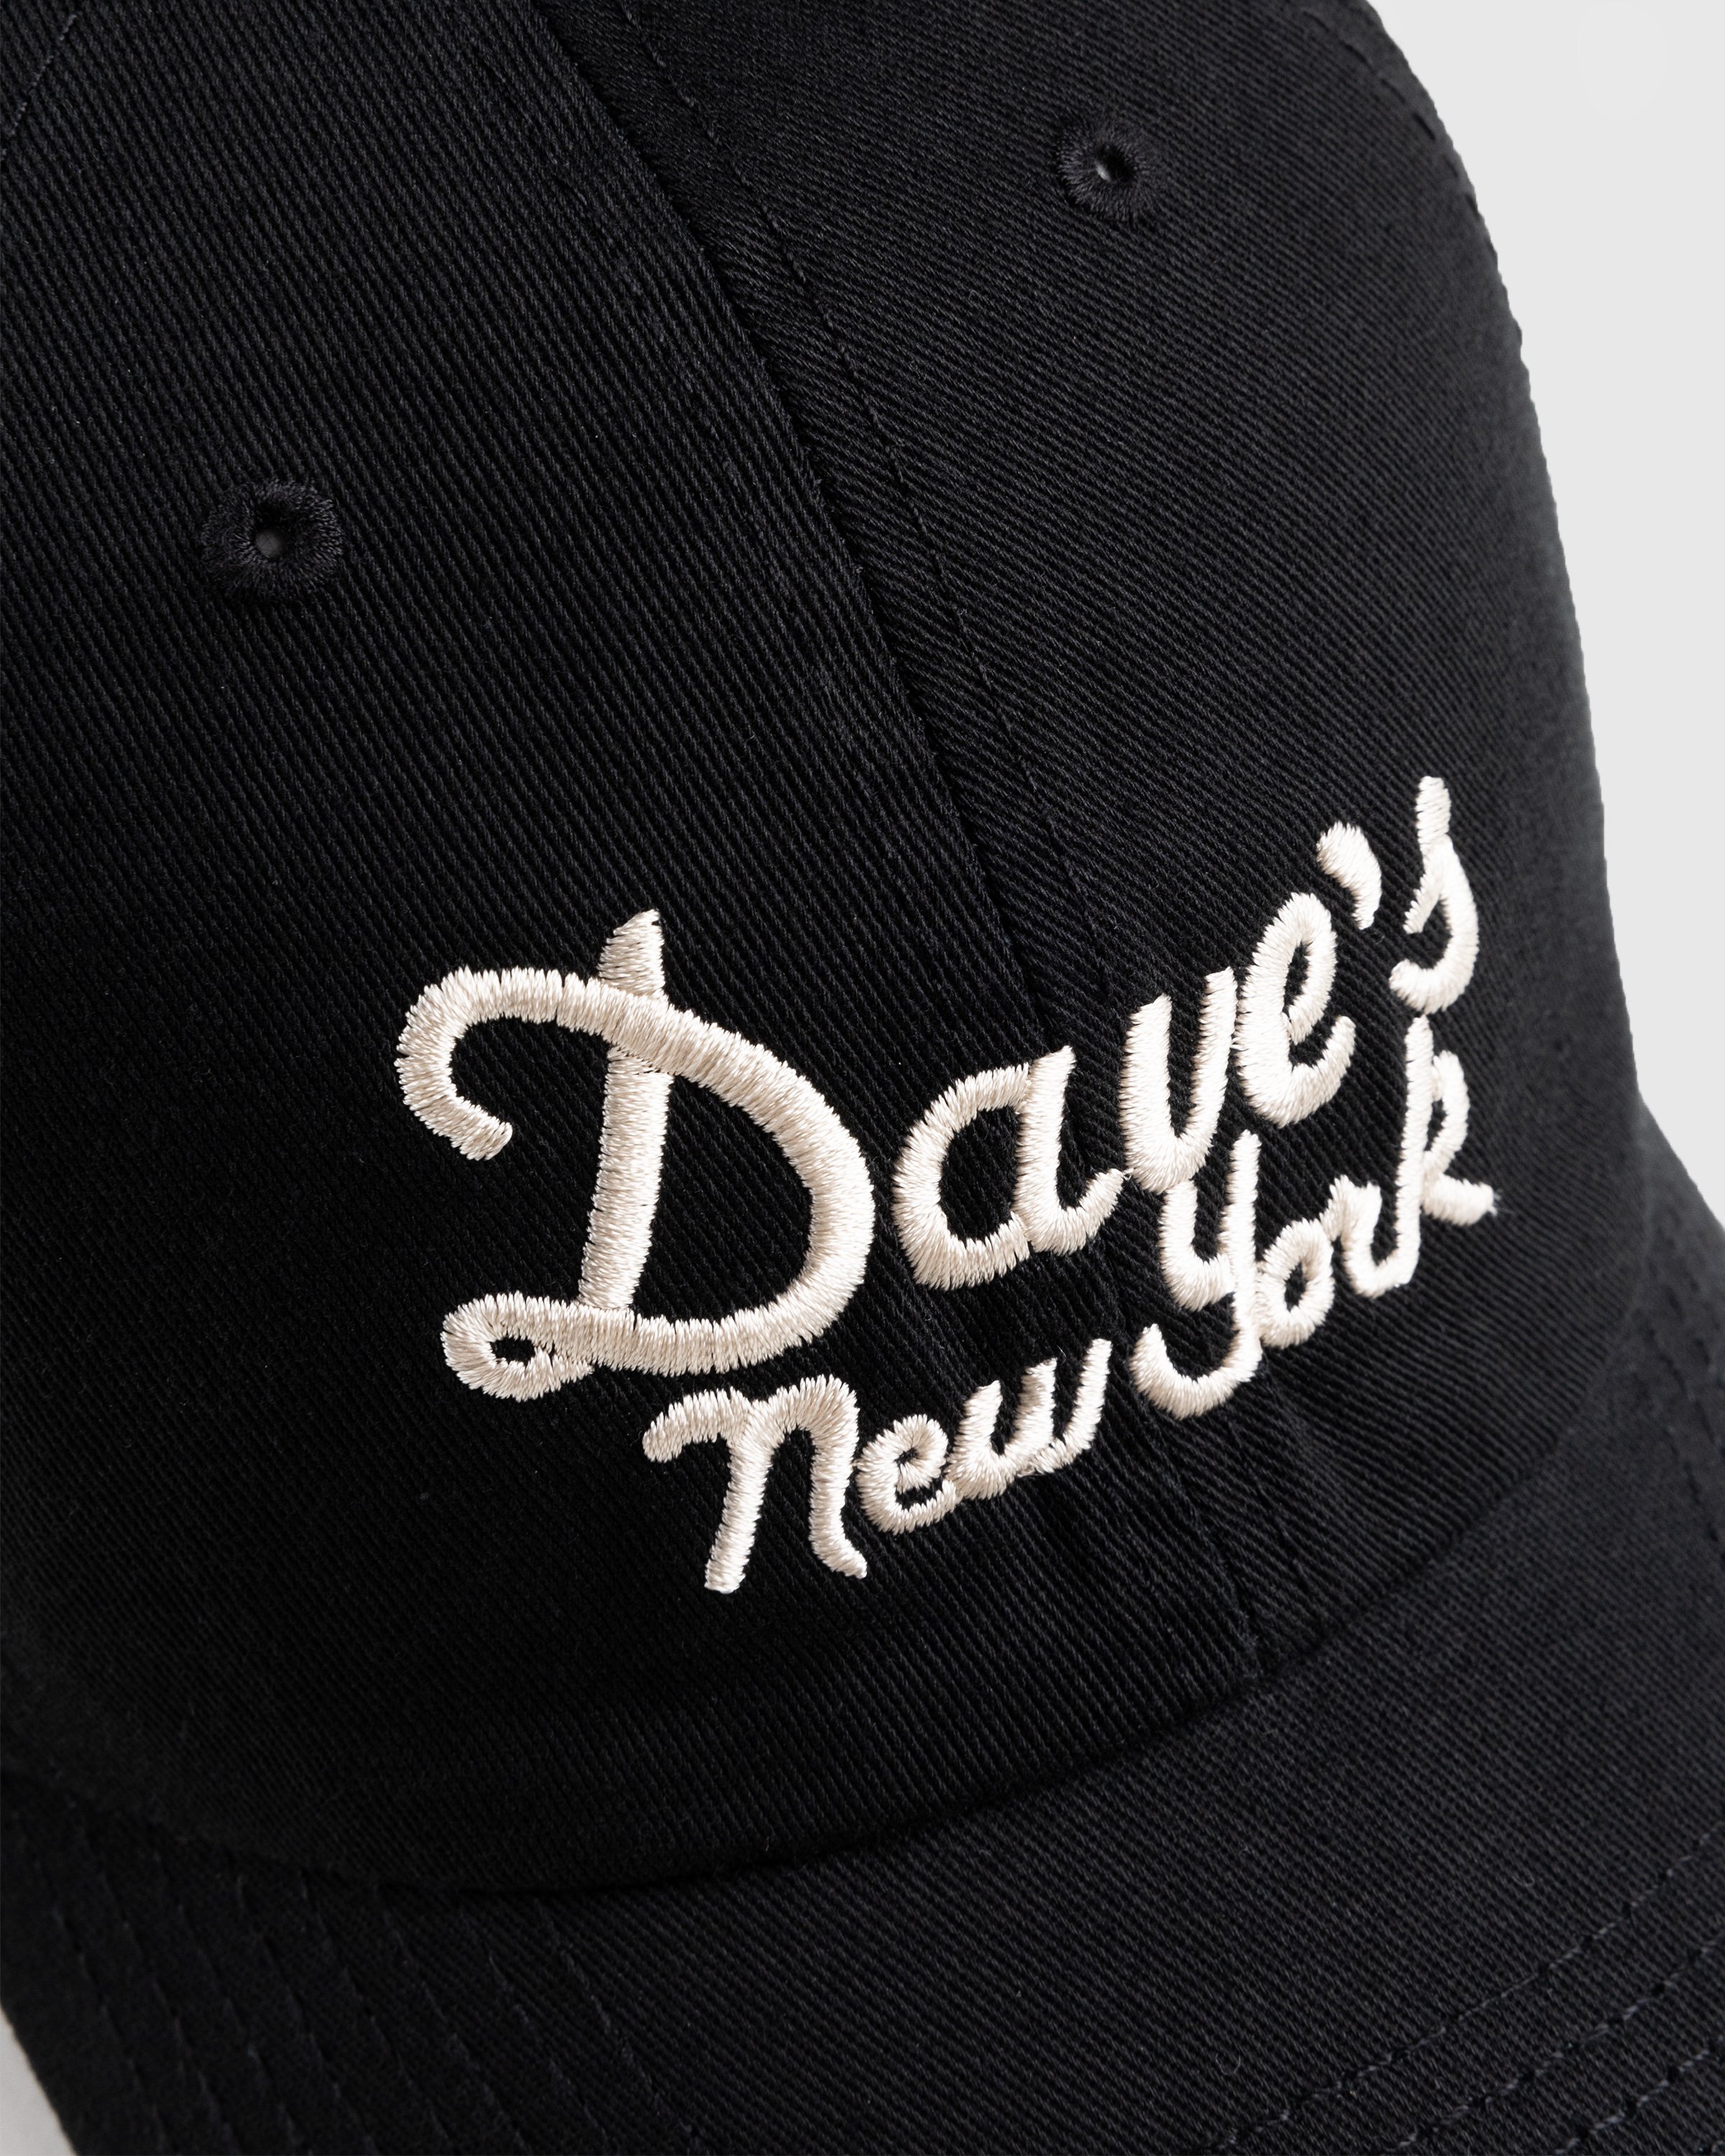 Dave's New York x Highsnobiety - Black Cap - Accessories - Black - Image 6